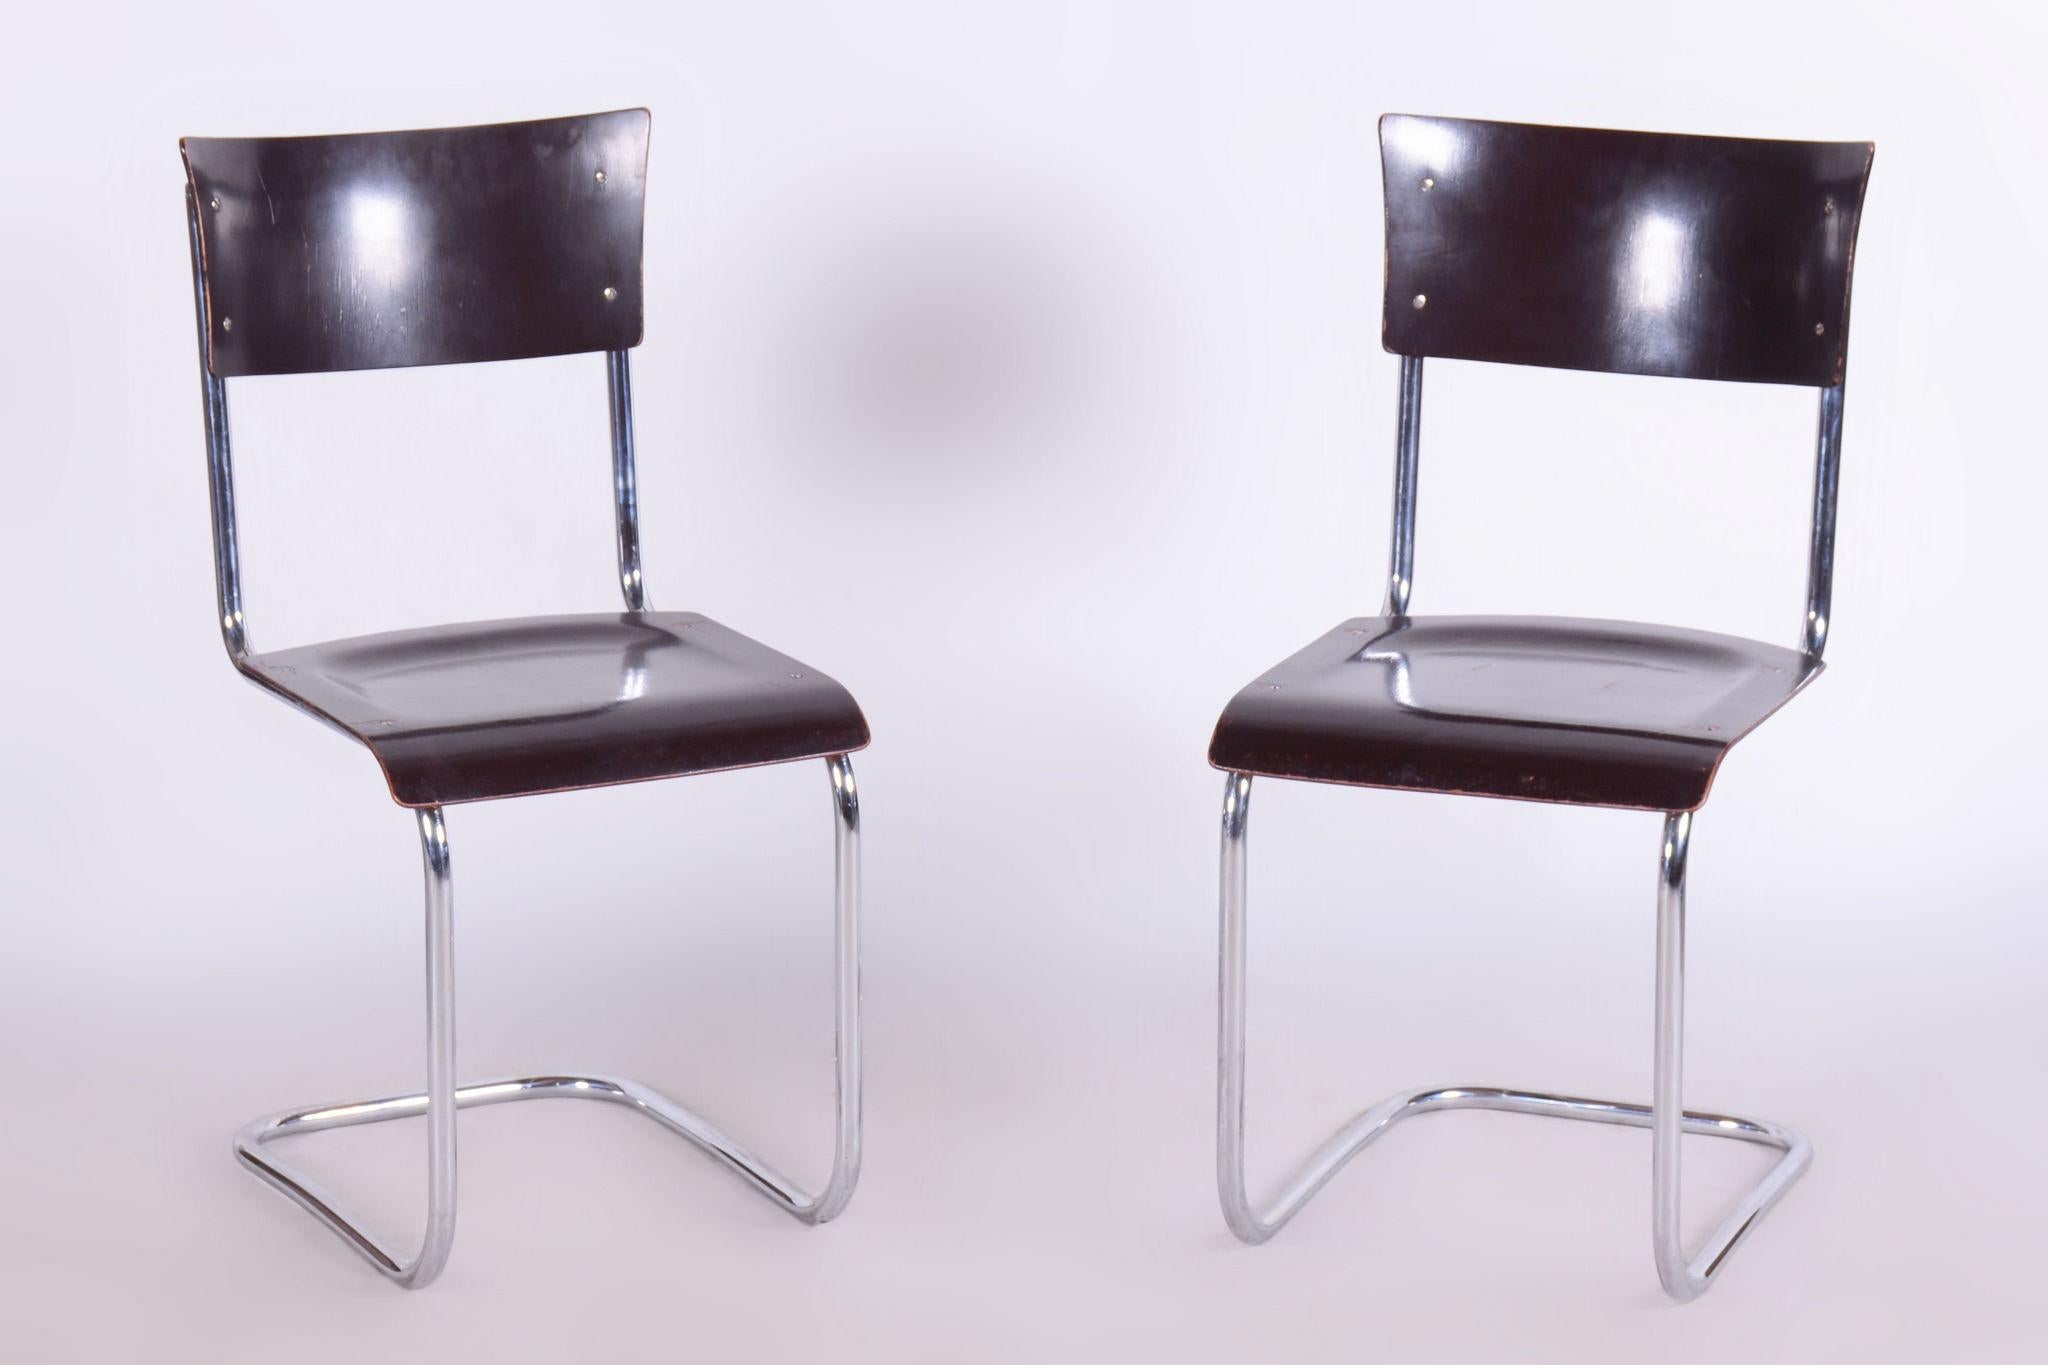 Set of 4 Restored Bauhaus Chairs, Mart Stam, Robert Slezak, Czechia, 1930s For Sale 1